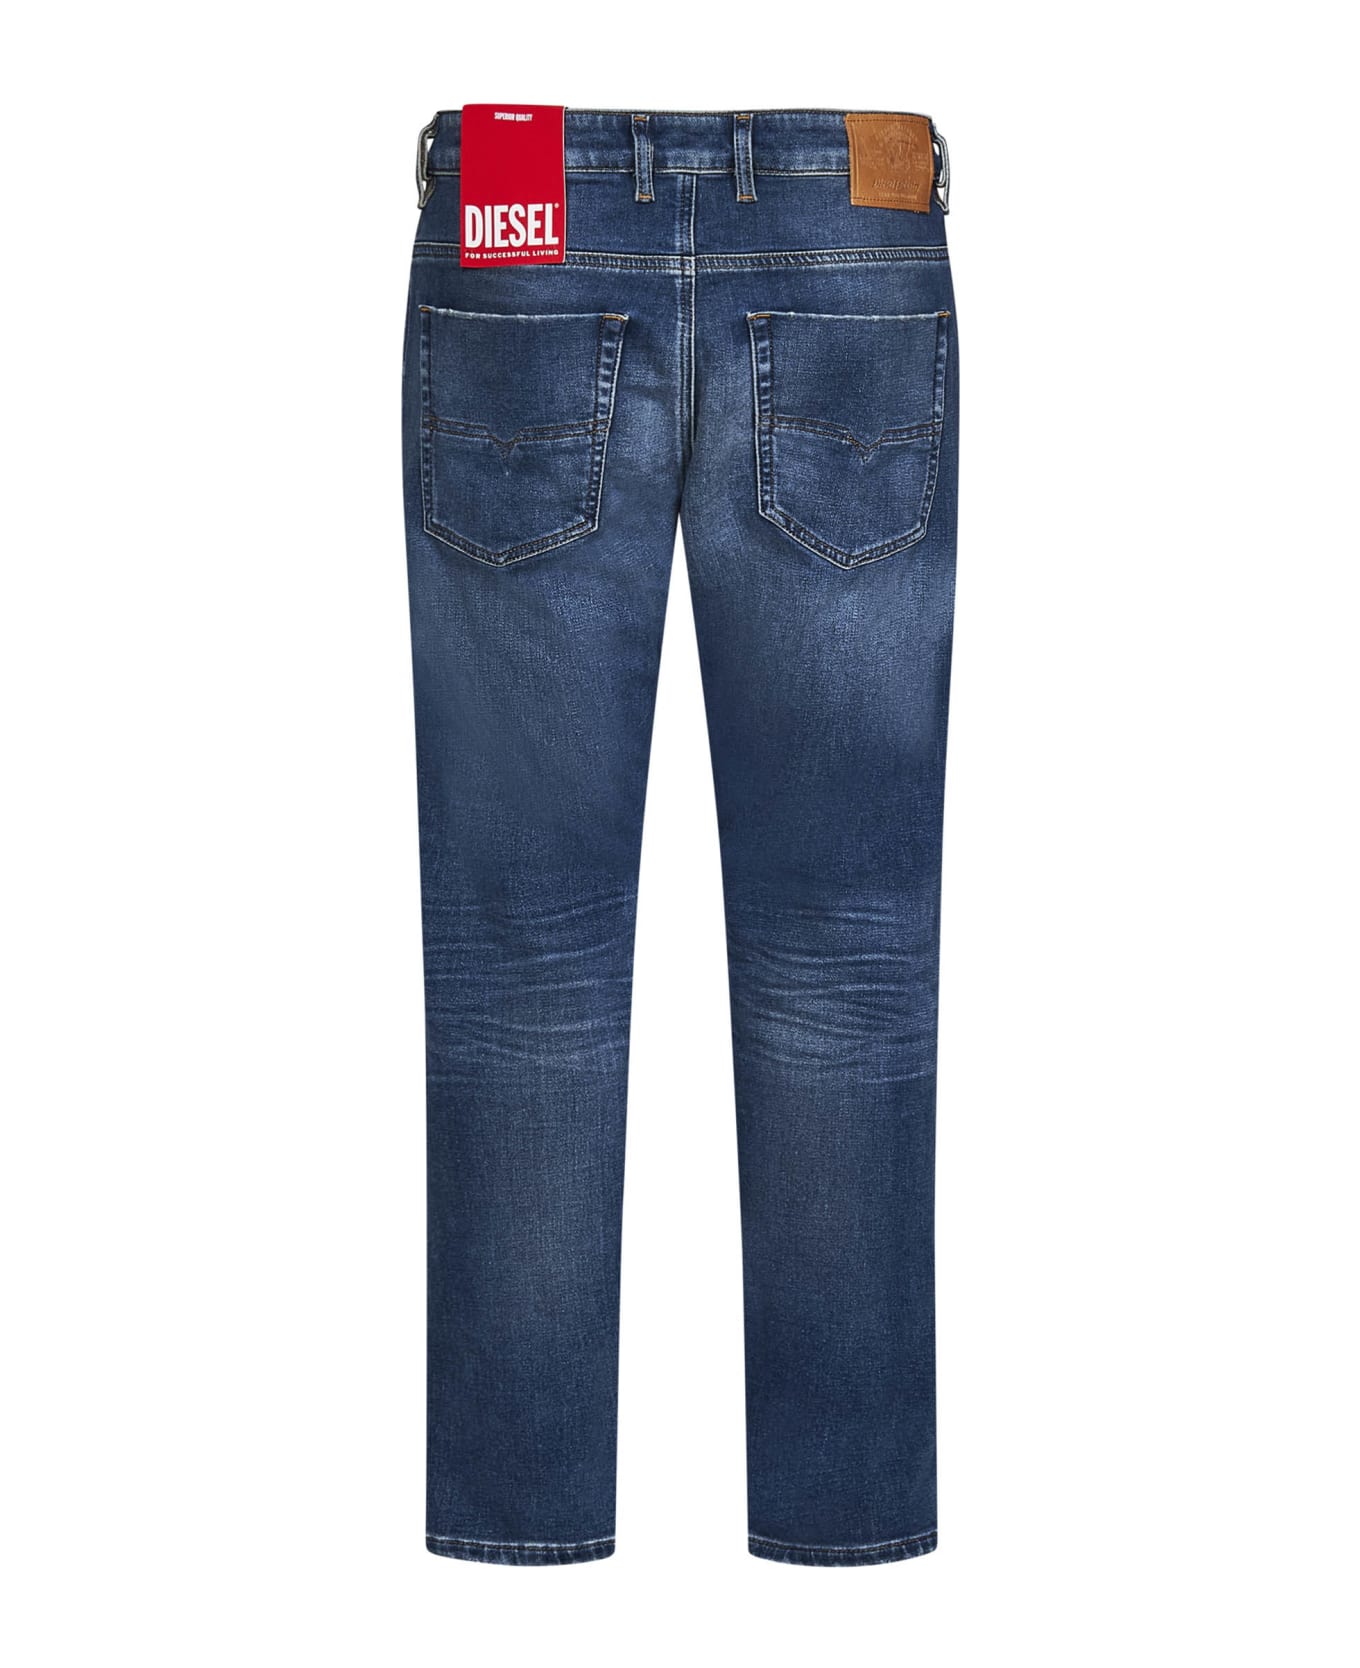 Diesel Krooley Joggjeans® 068cx Tapered Jeans - Blue